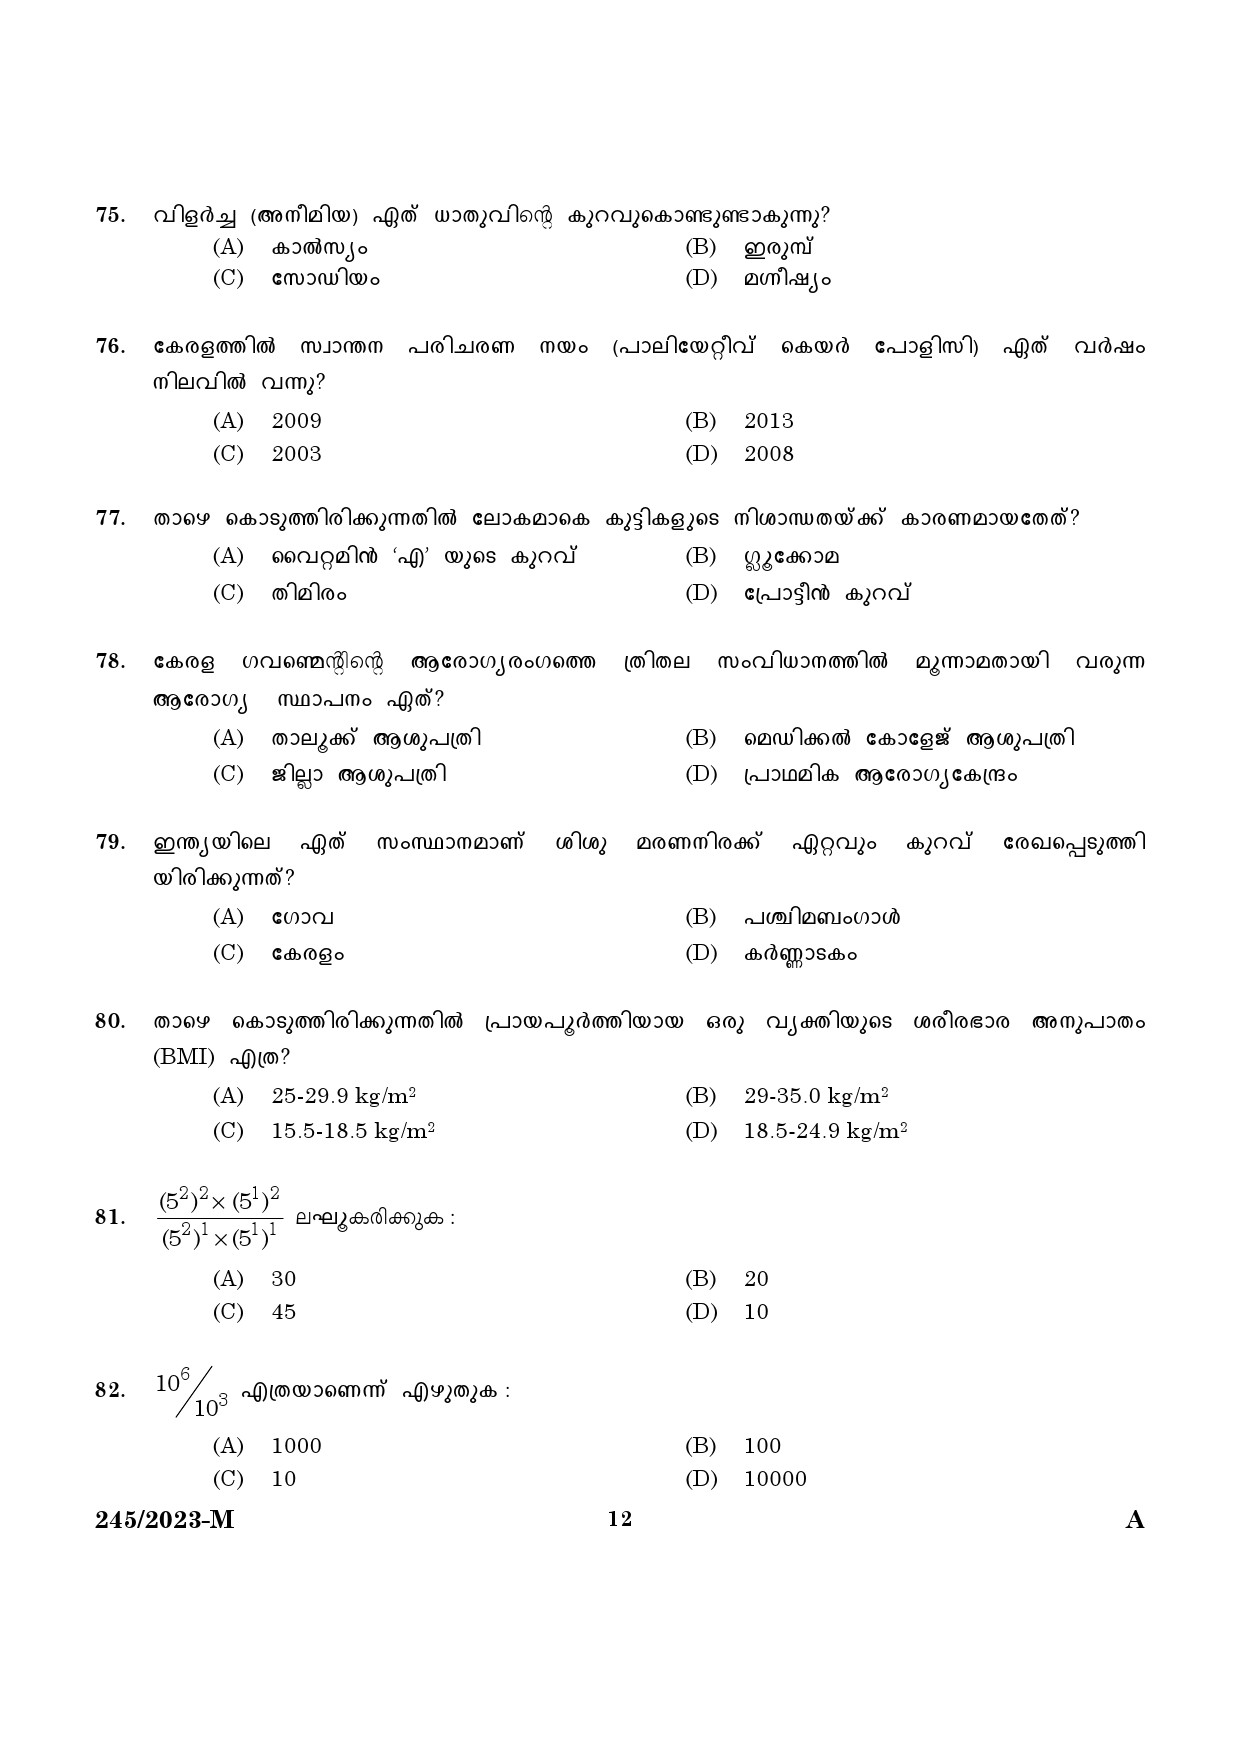 KPSC LGS Malayalam Exam 2023 Code 2452023 M 10